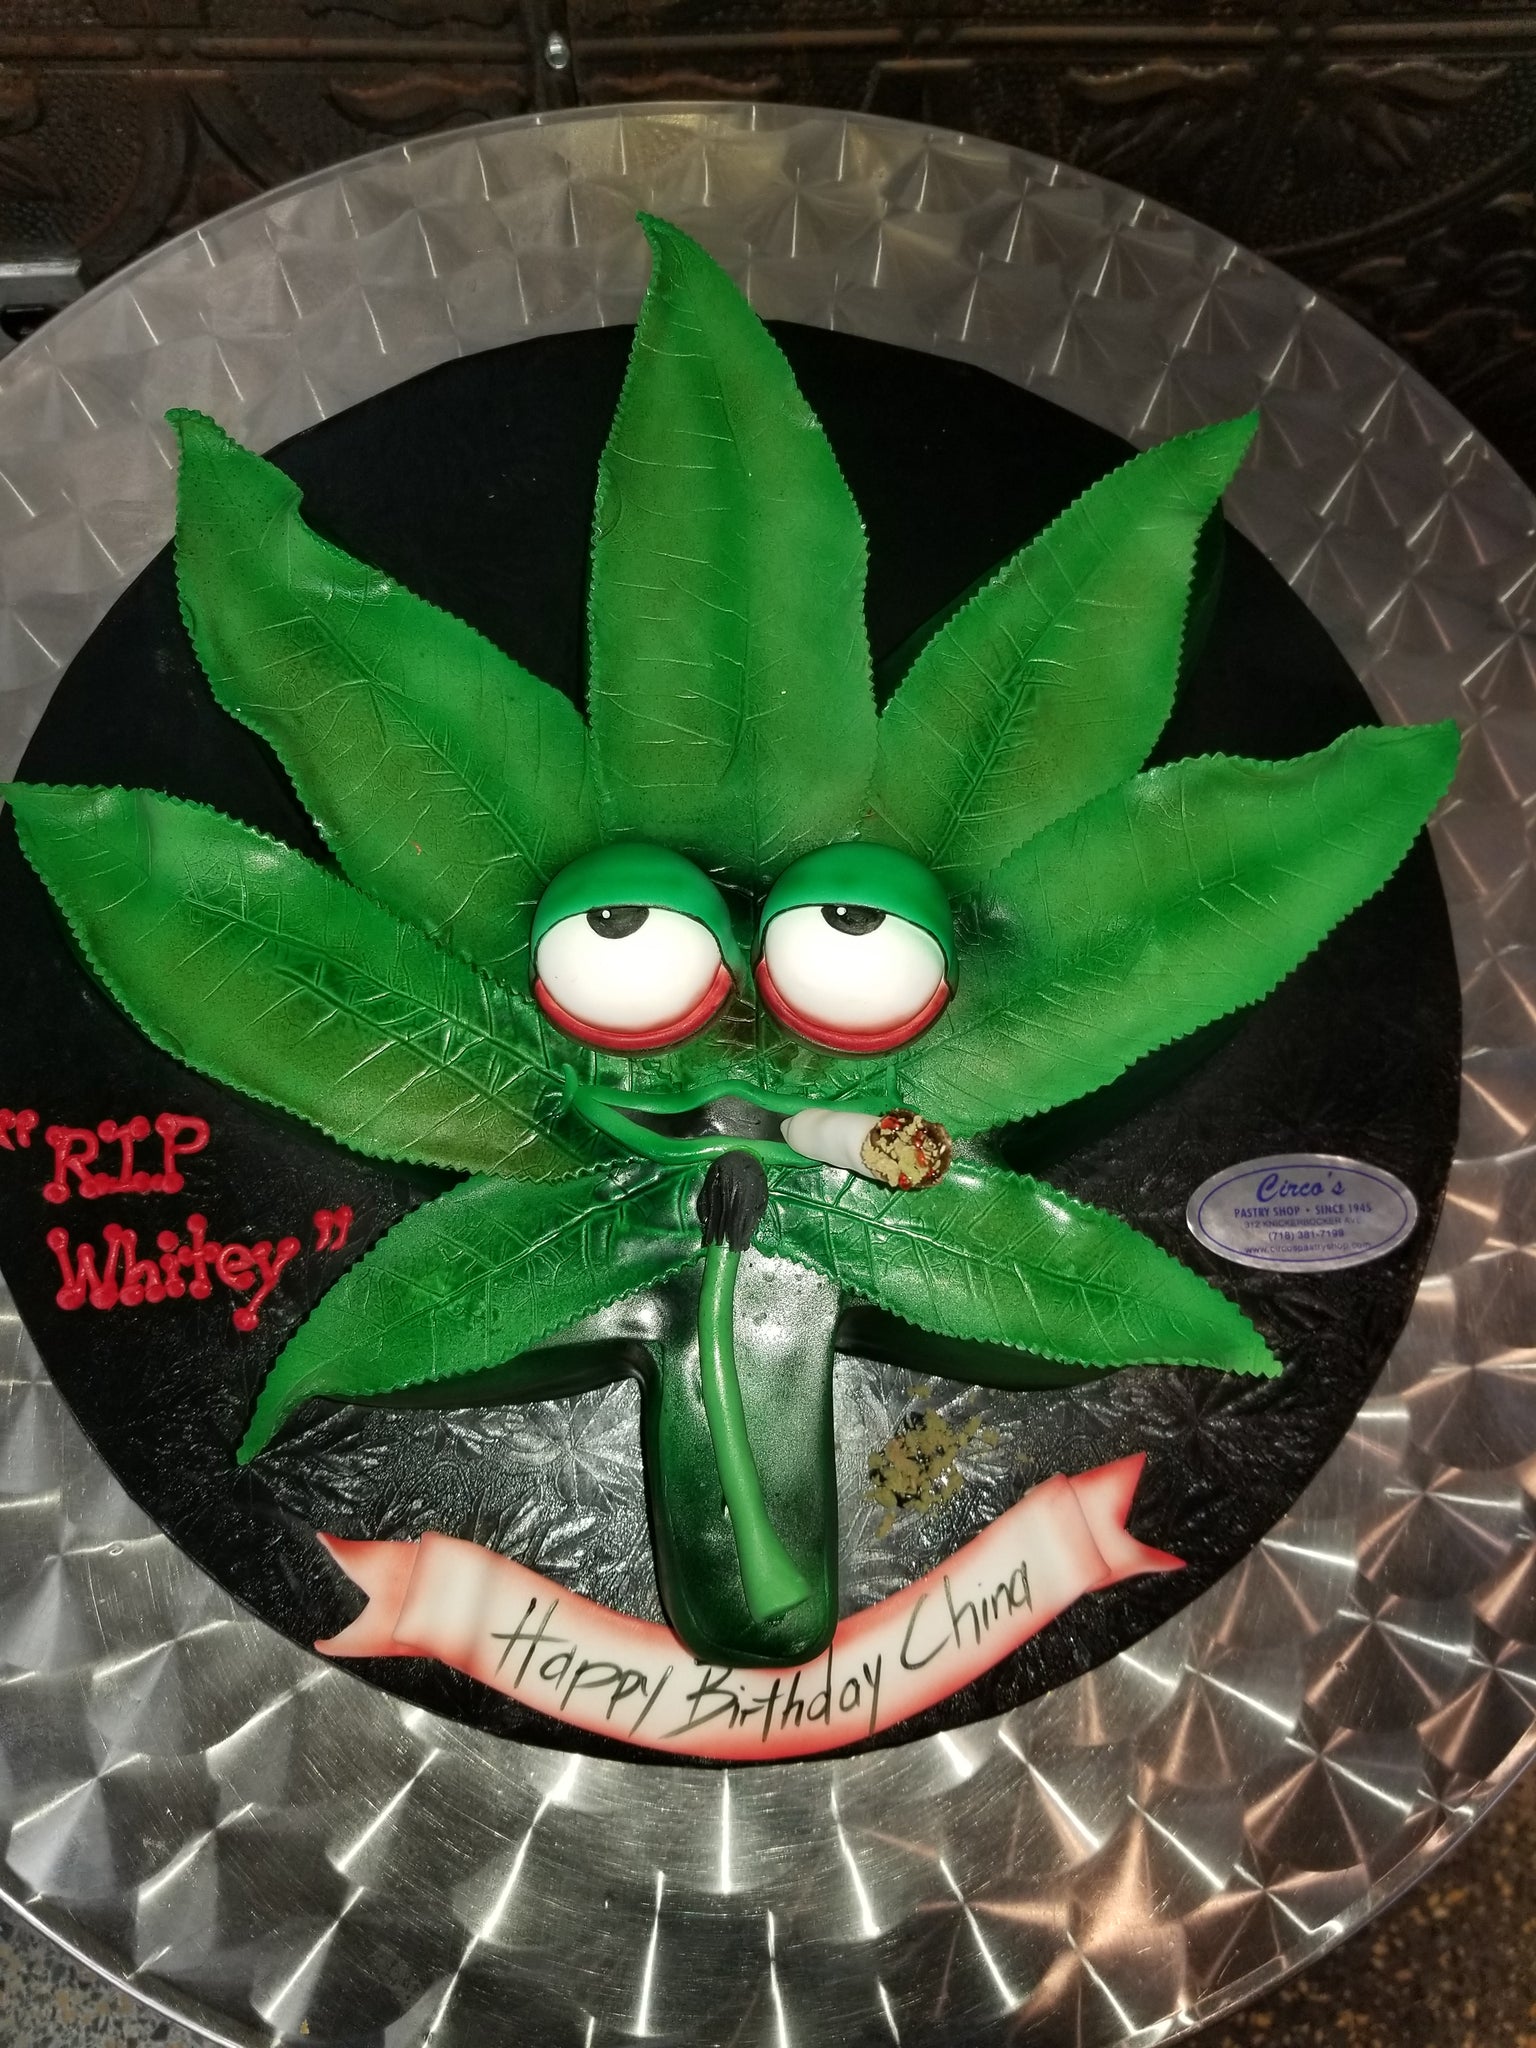 Rihanna celebrates with cannabis cake